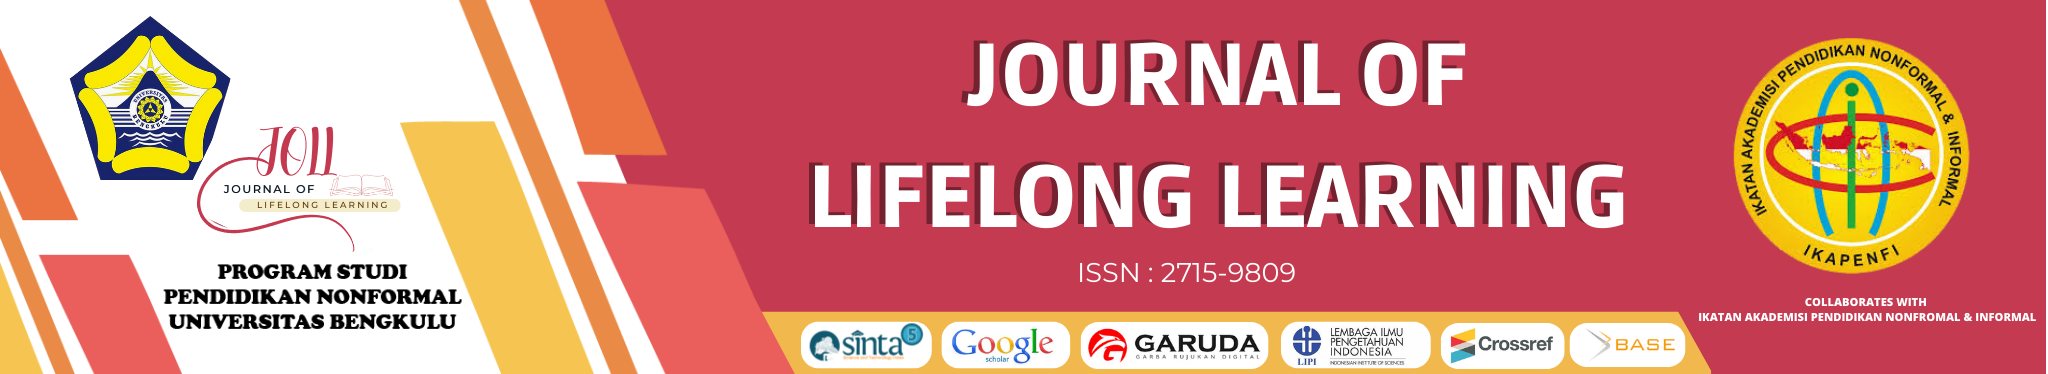 Journal of Lifelong Learning